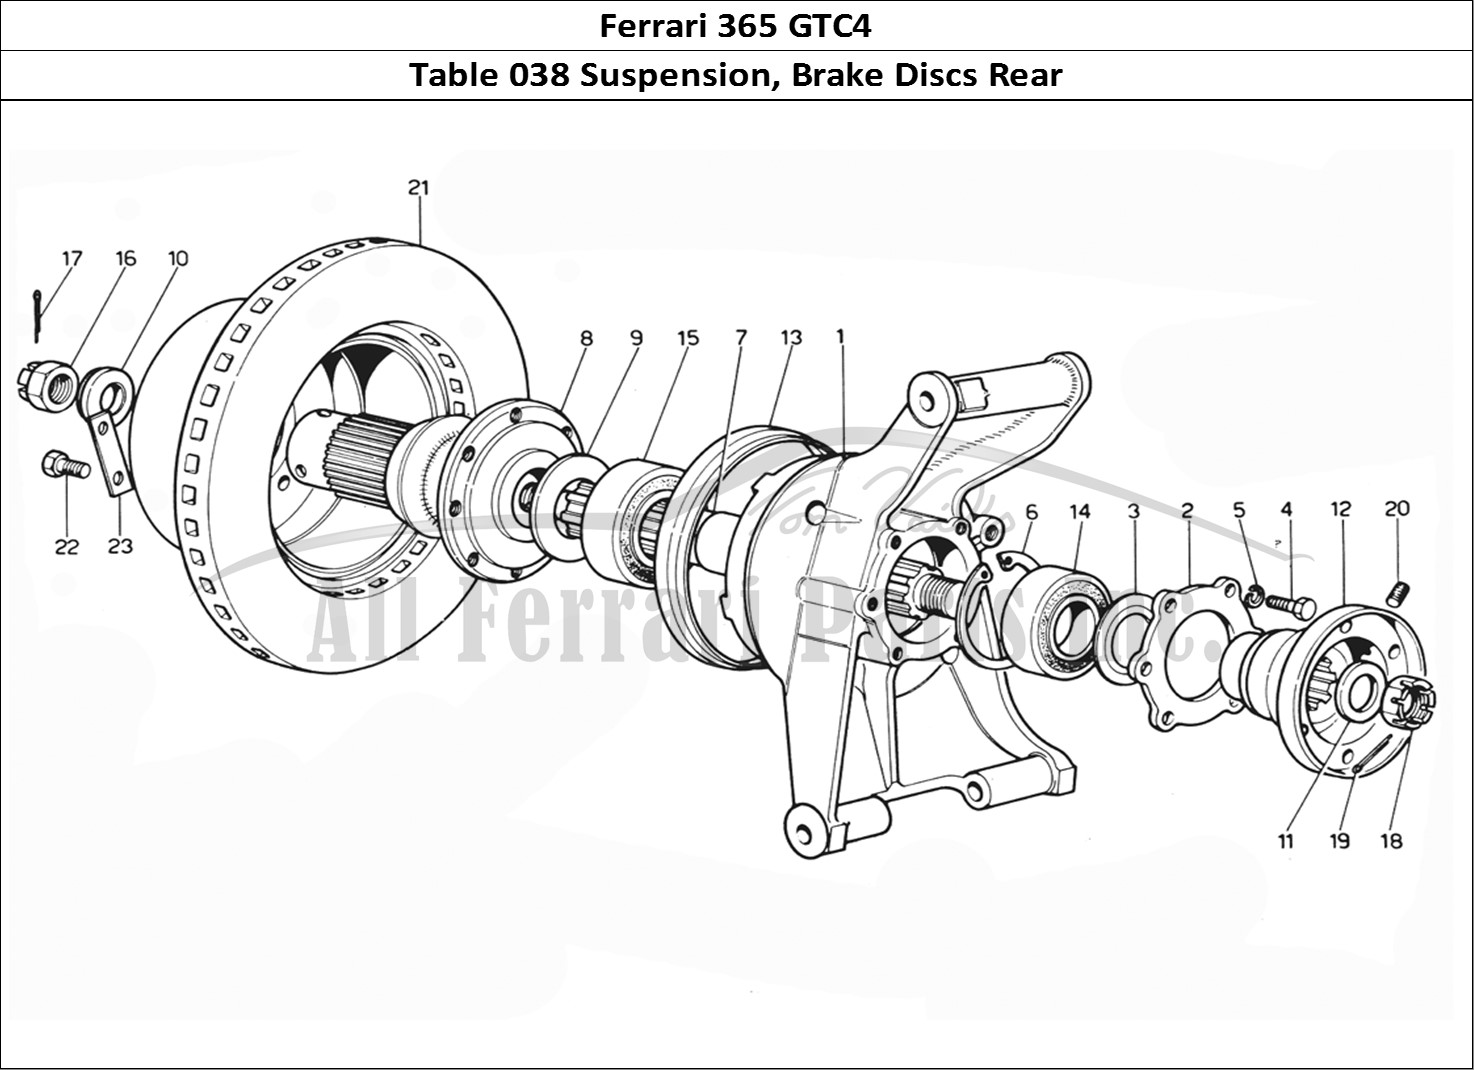 Ferrari Parts Ferrari 365 GTC4 (Mechanical) Page 038 Rear suspension & brake d